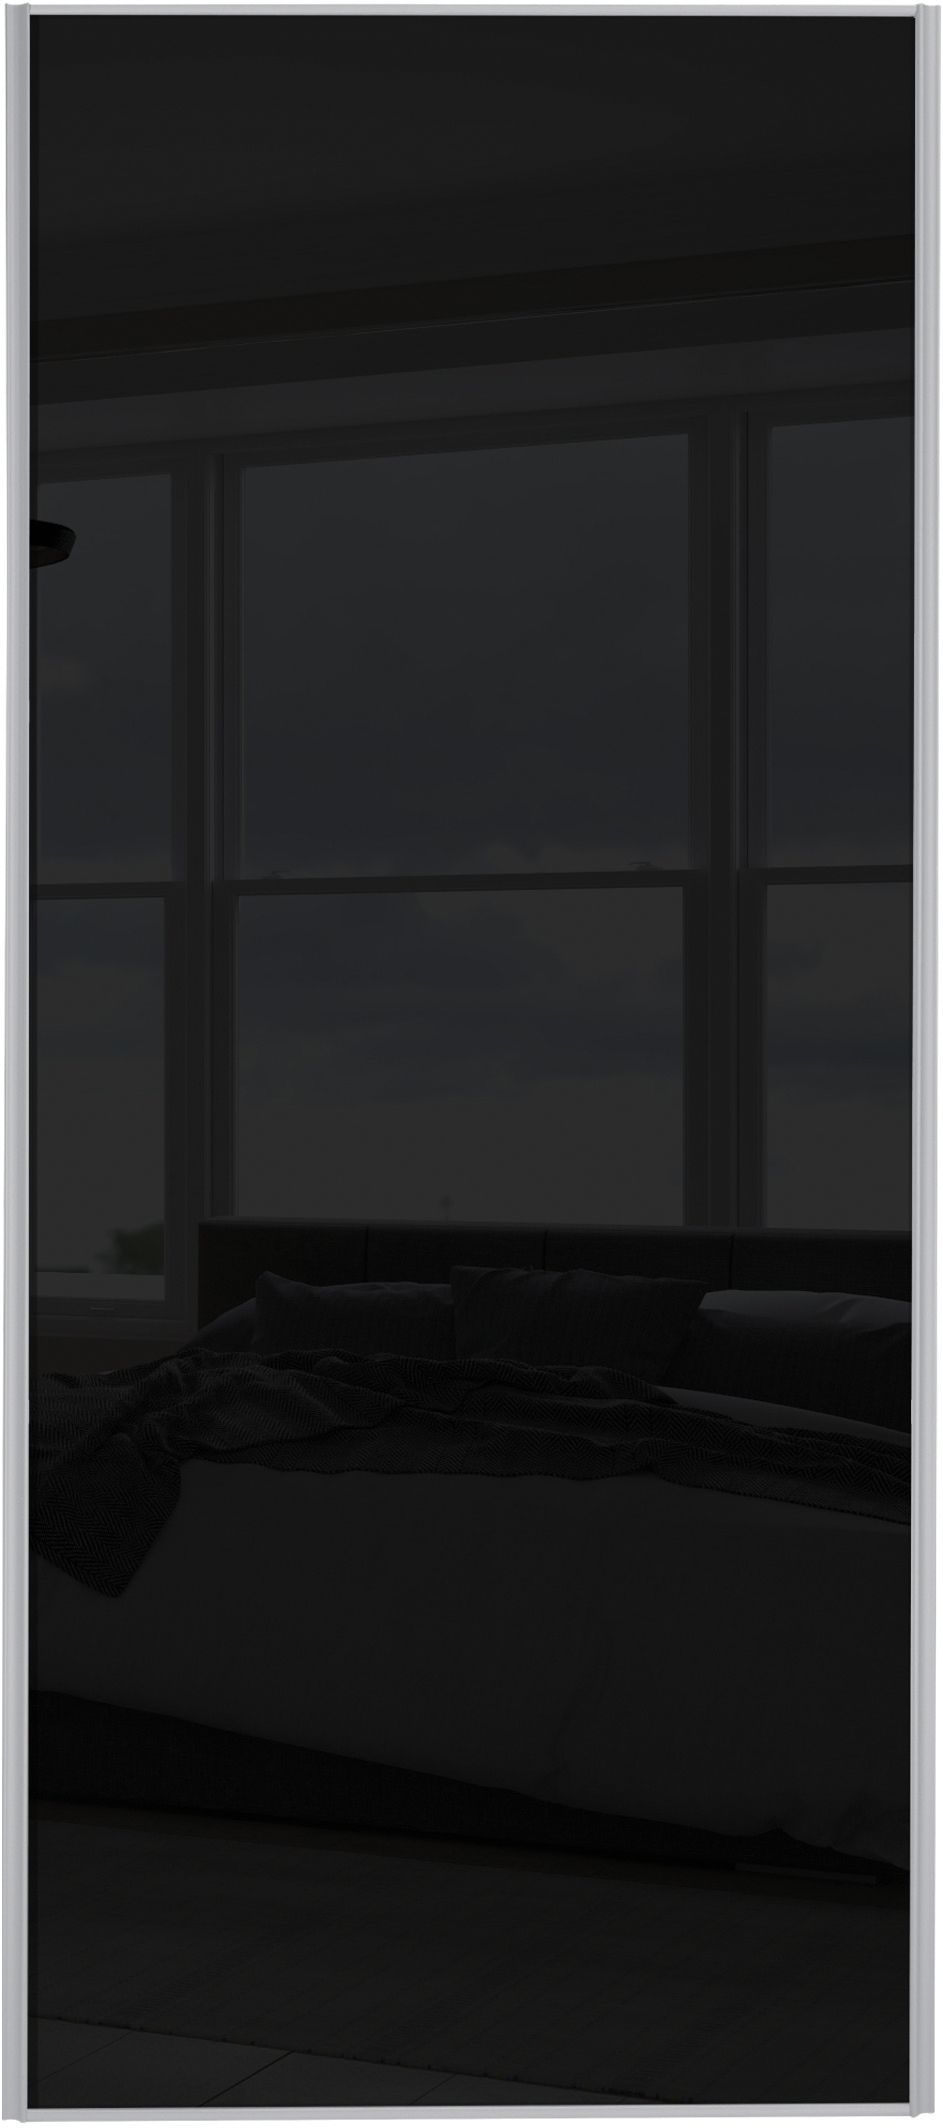 Image of Spacepro Sliding Wardrobe Door Silver Framed Single Panel Black Glass - 2220 x 610mm